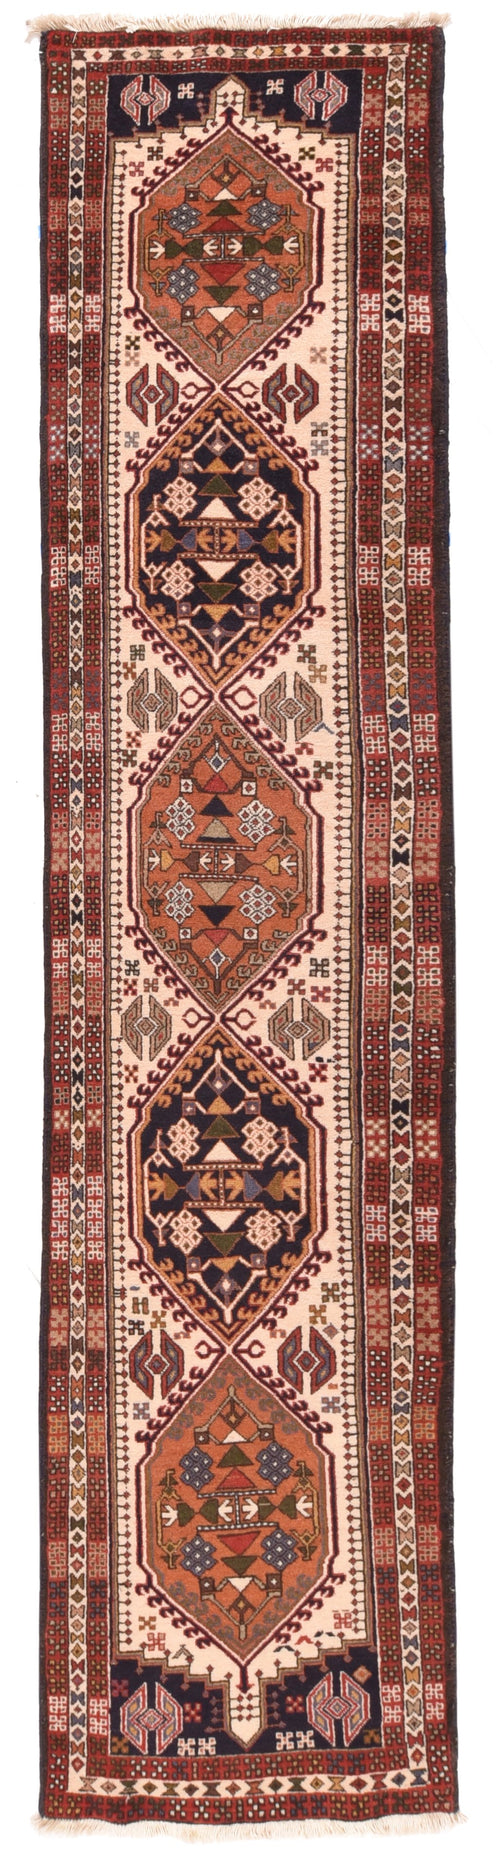 Semi Antique Light Brown Persian Tribal  Area Rug